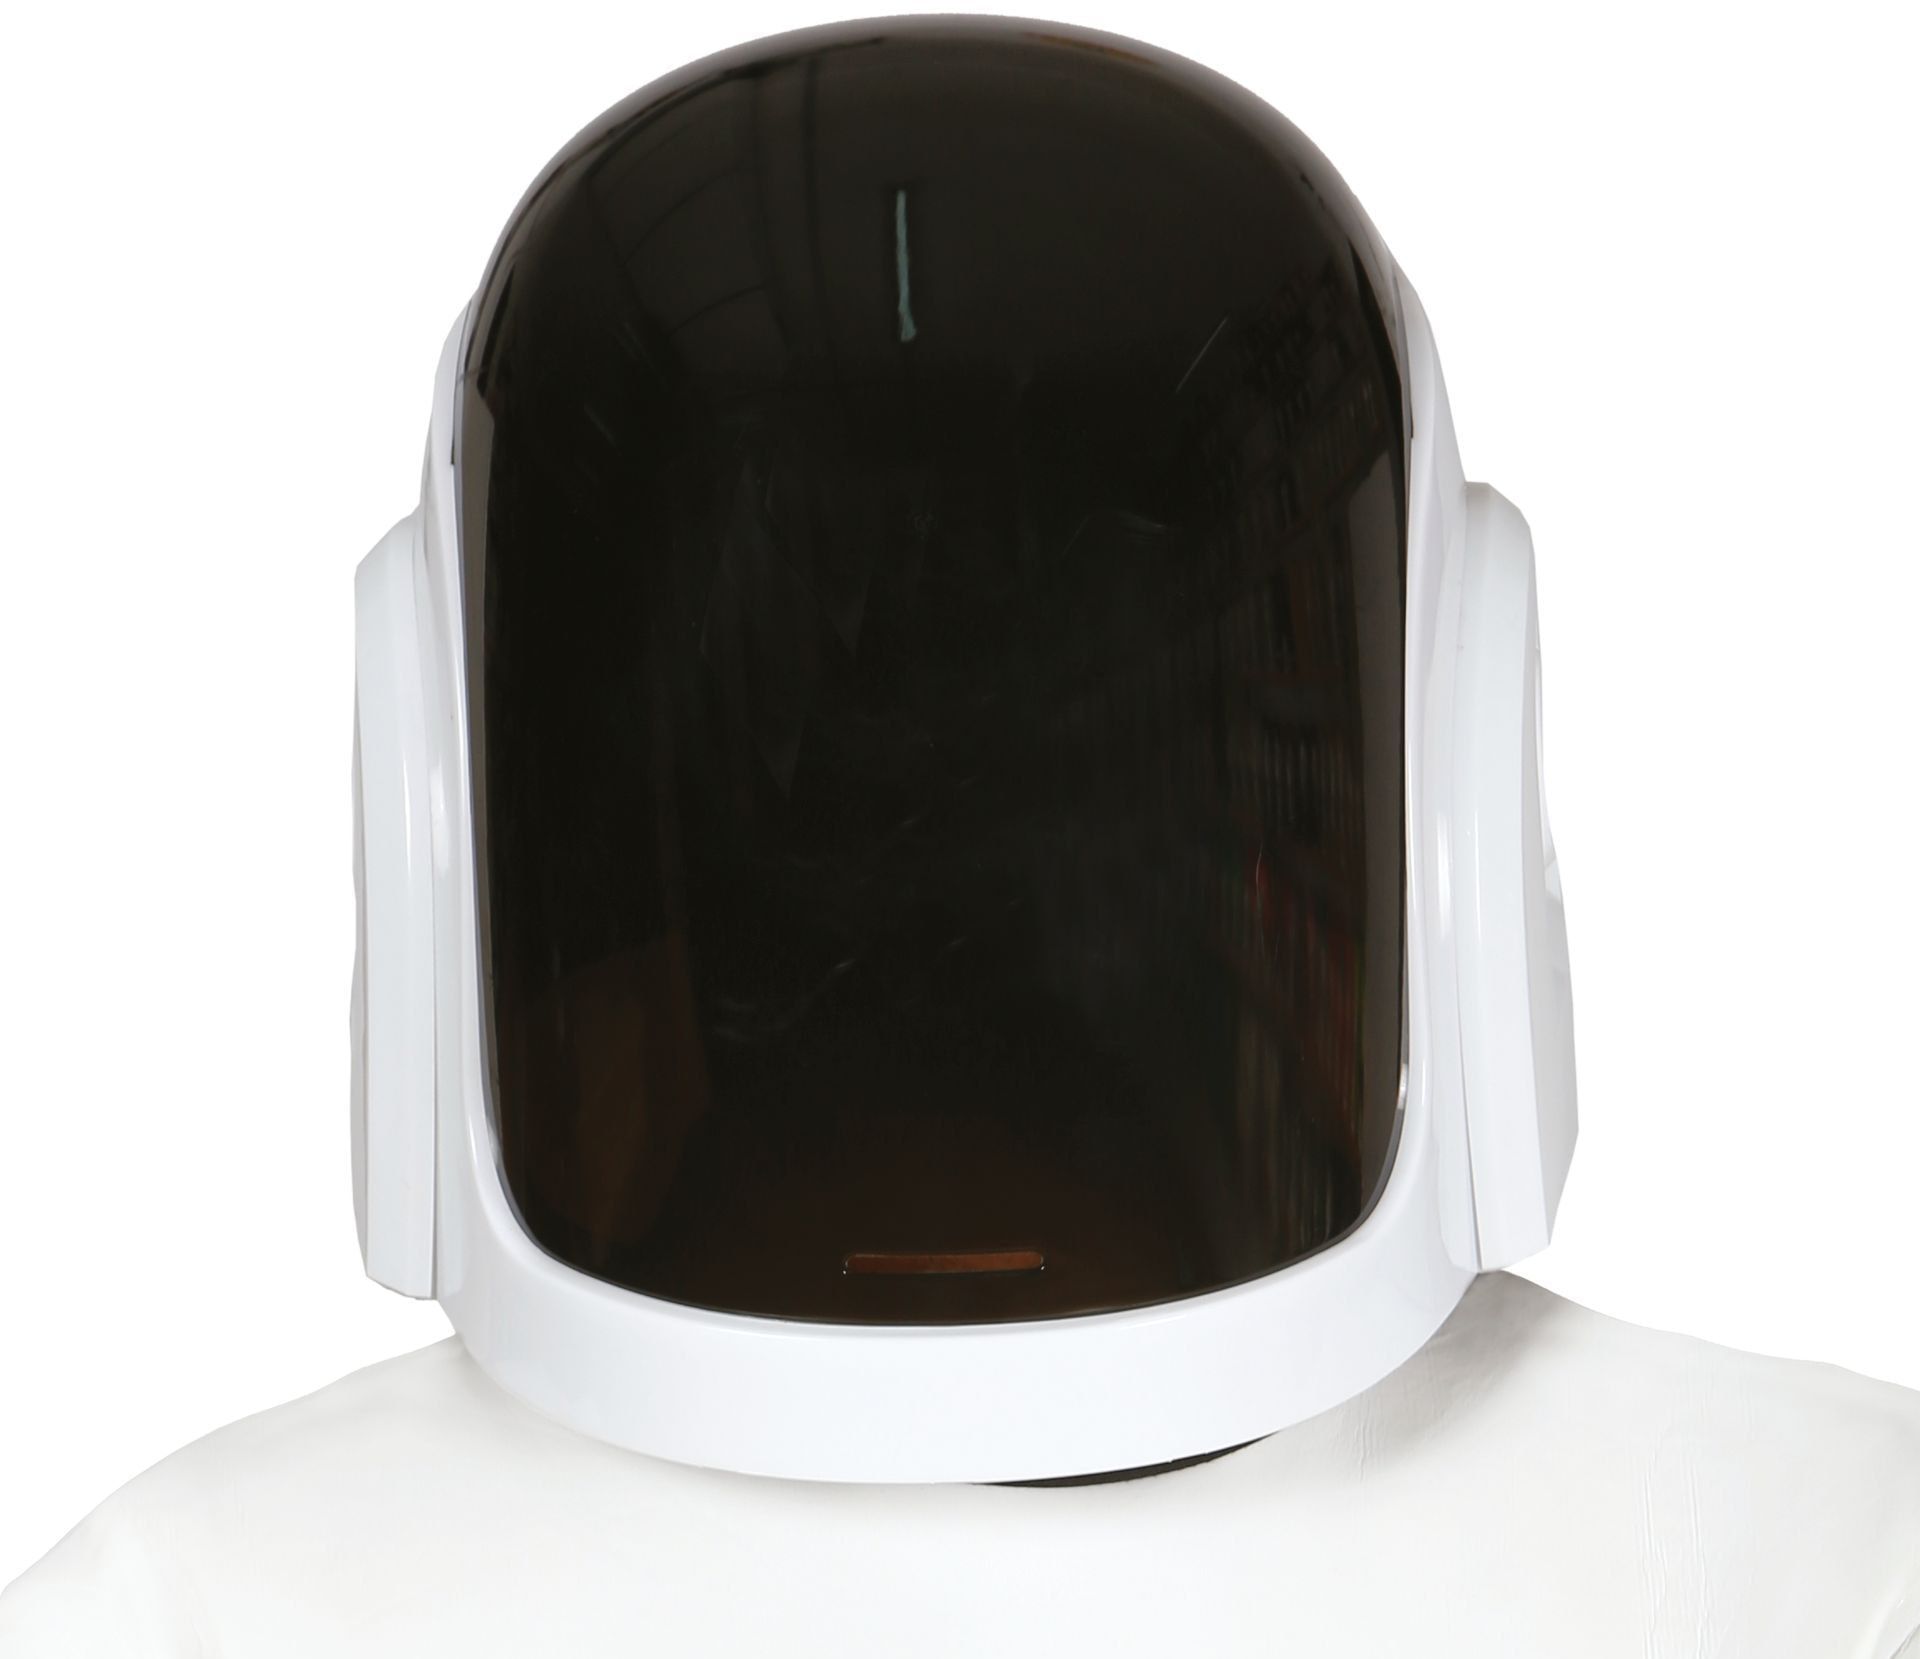 Witte Daft Punk helm